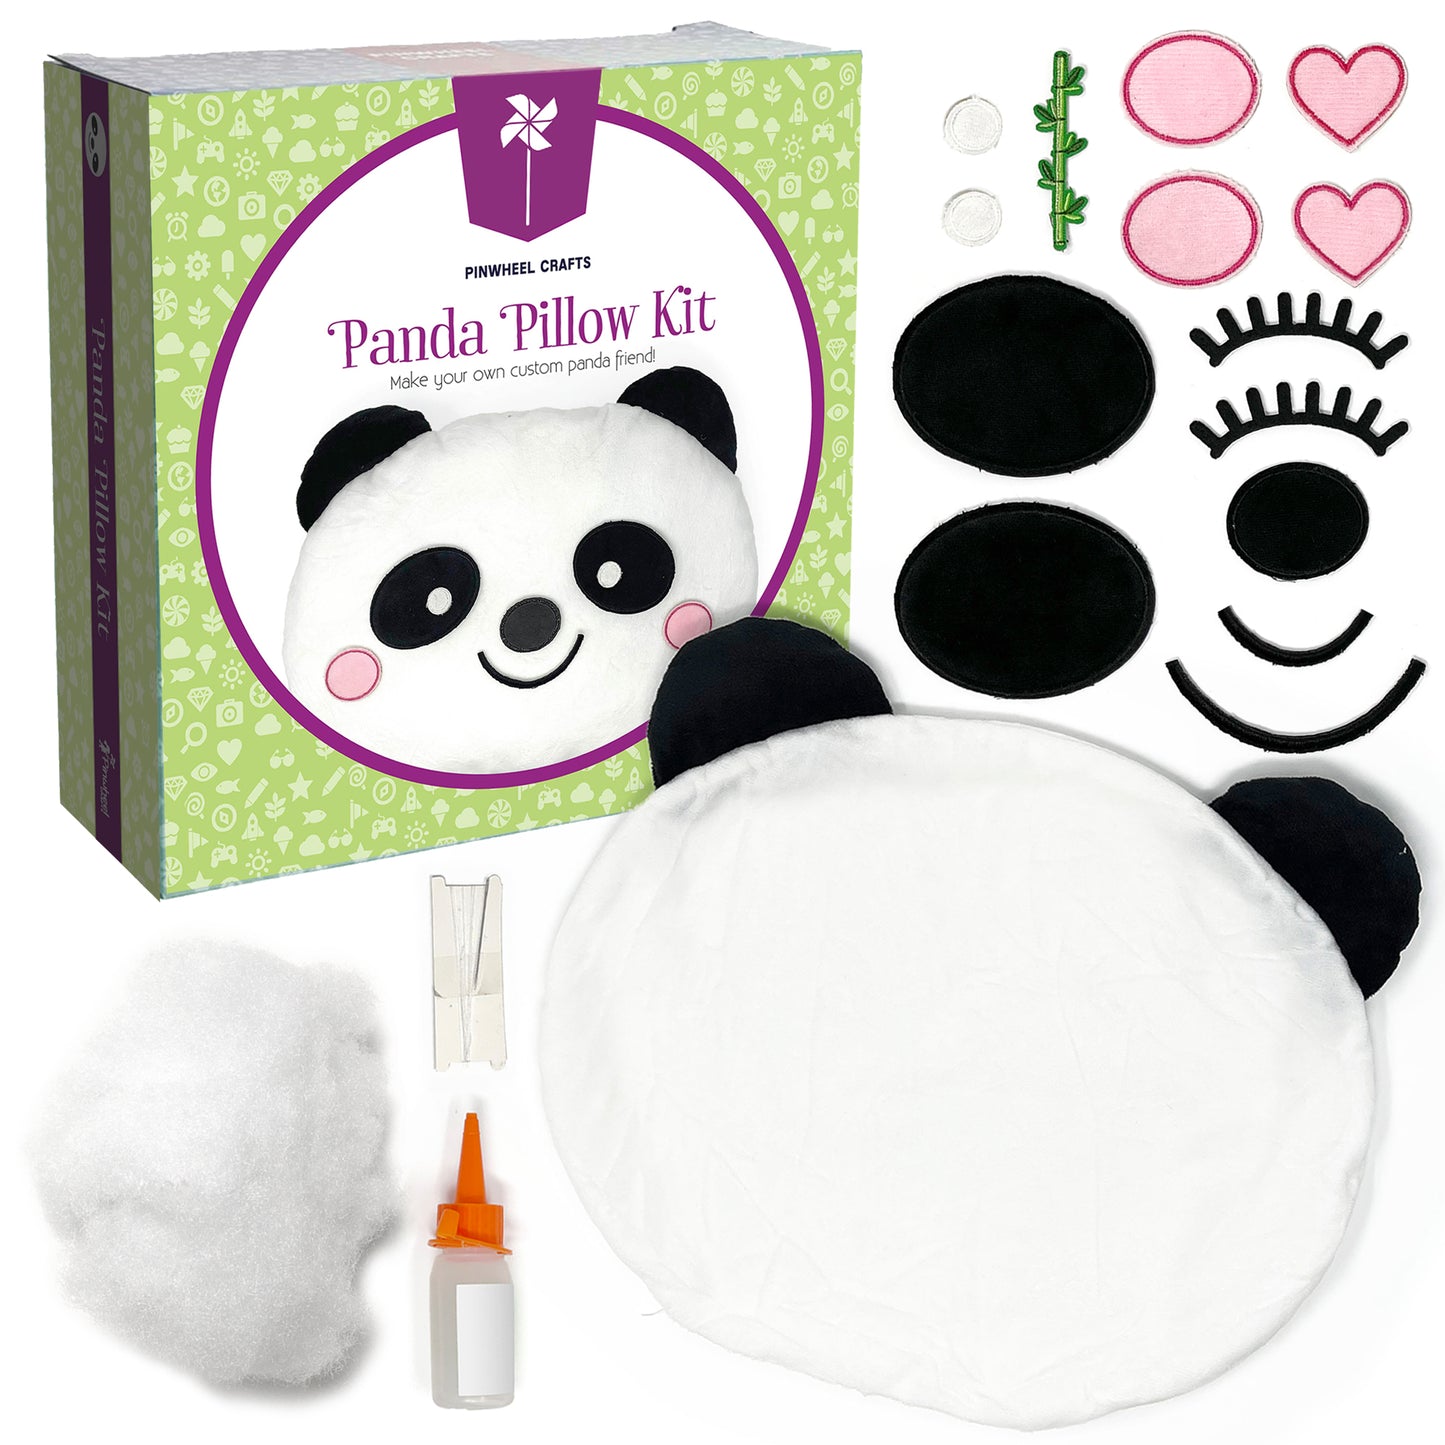 Panda Pillow Kit